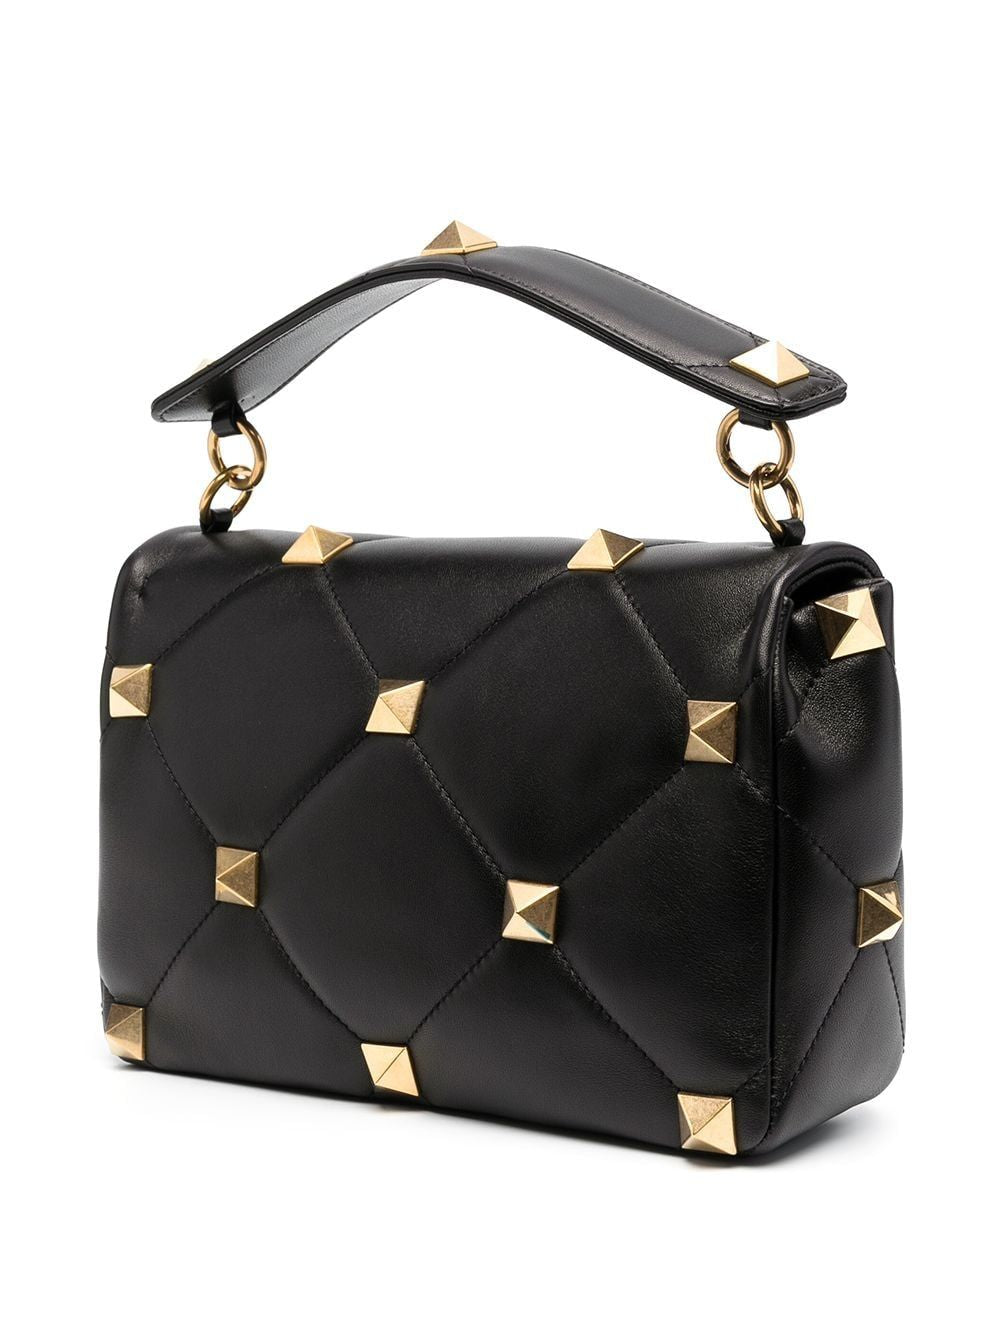 VALENTINO GARAVANI Chic Black Lambskin Leather Large Shoulder Bag for Women - SS23 Collection